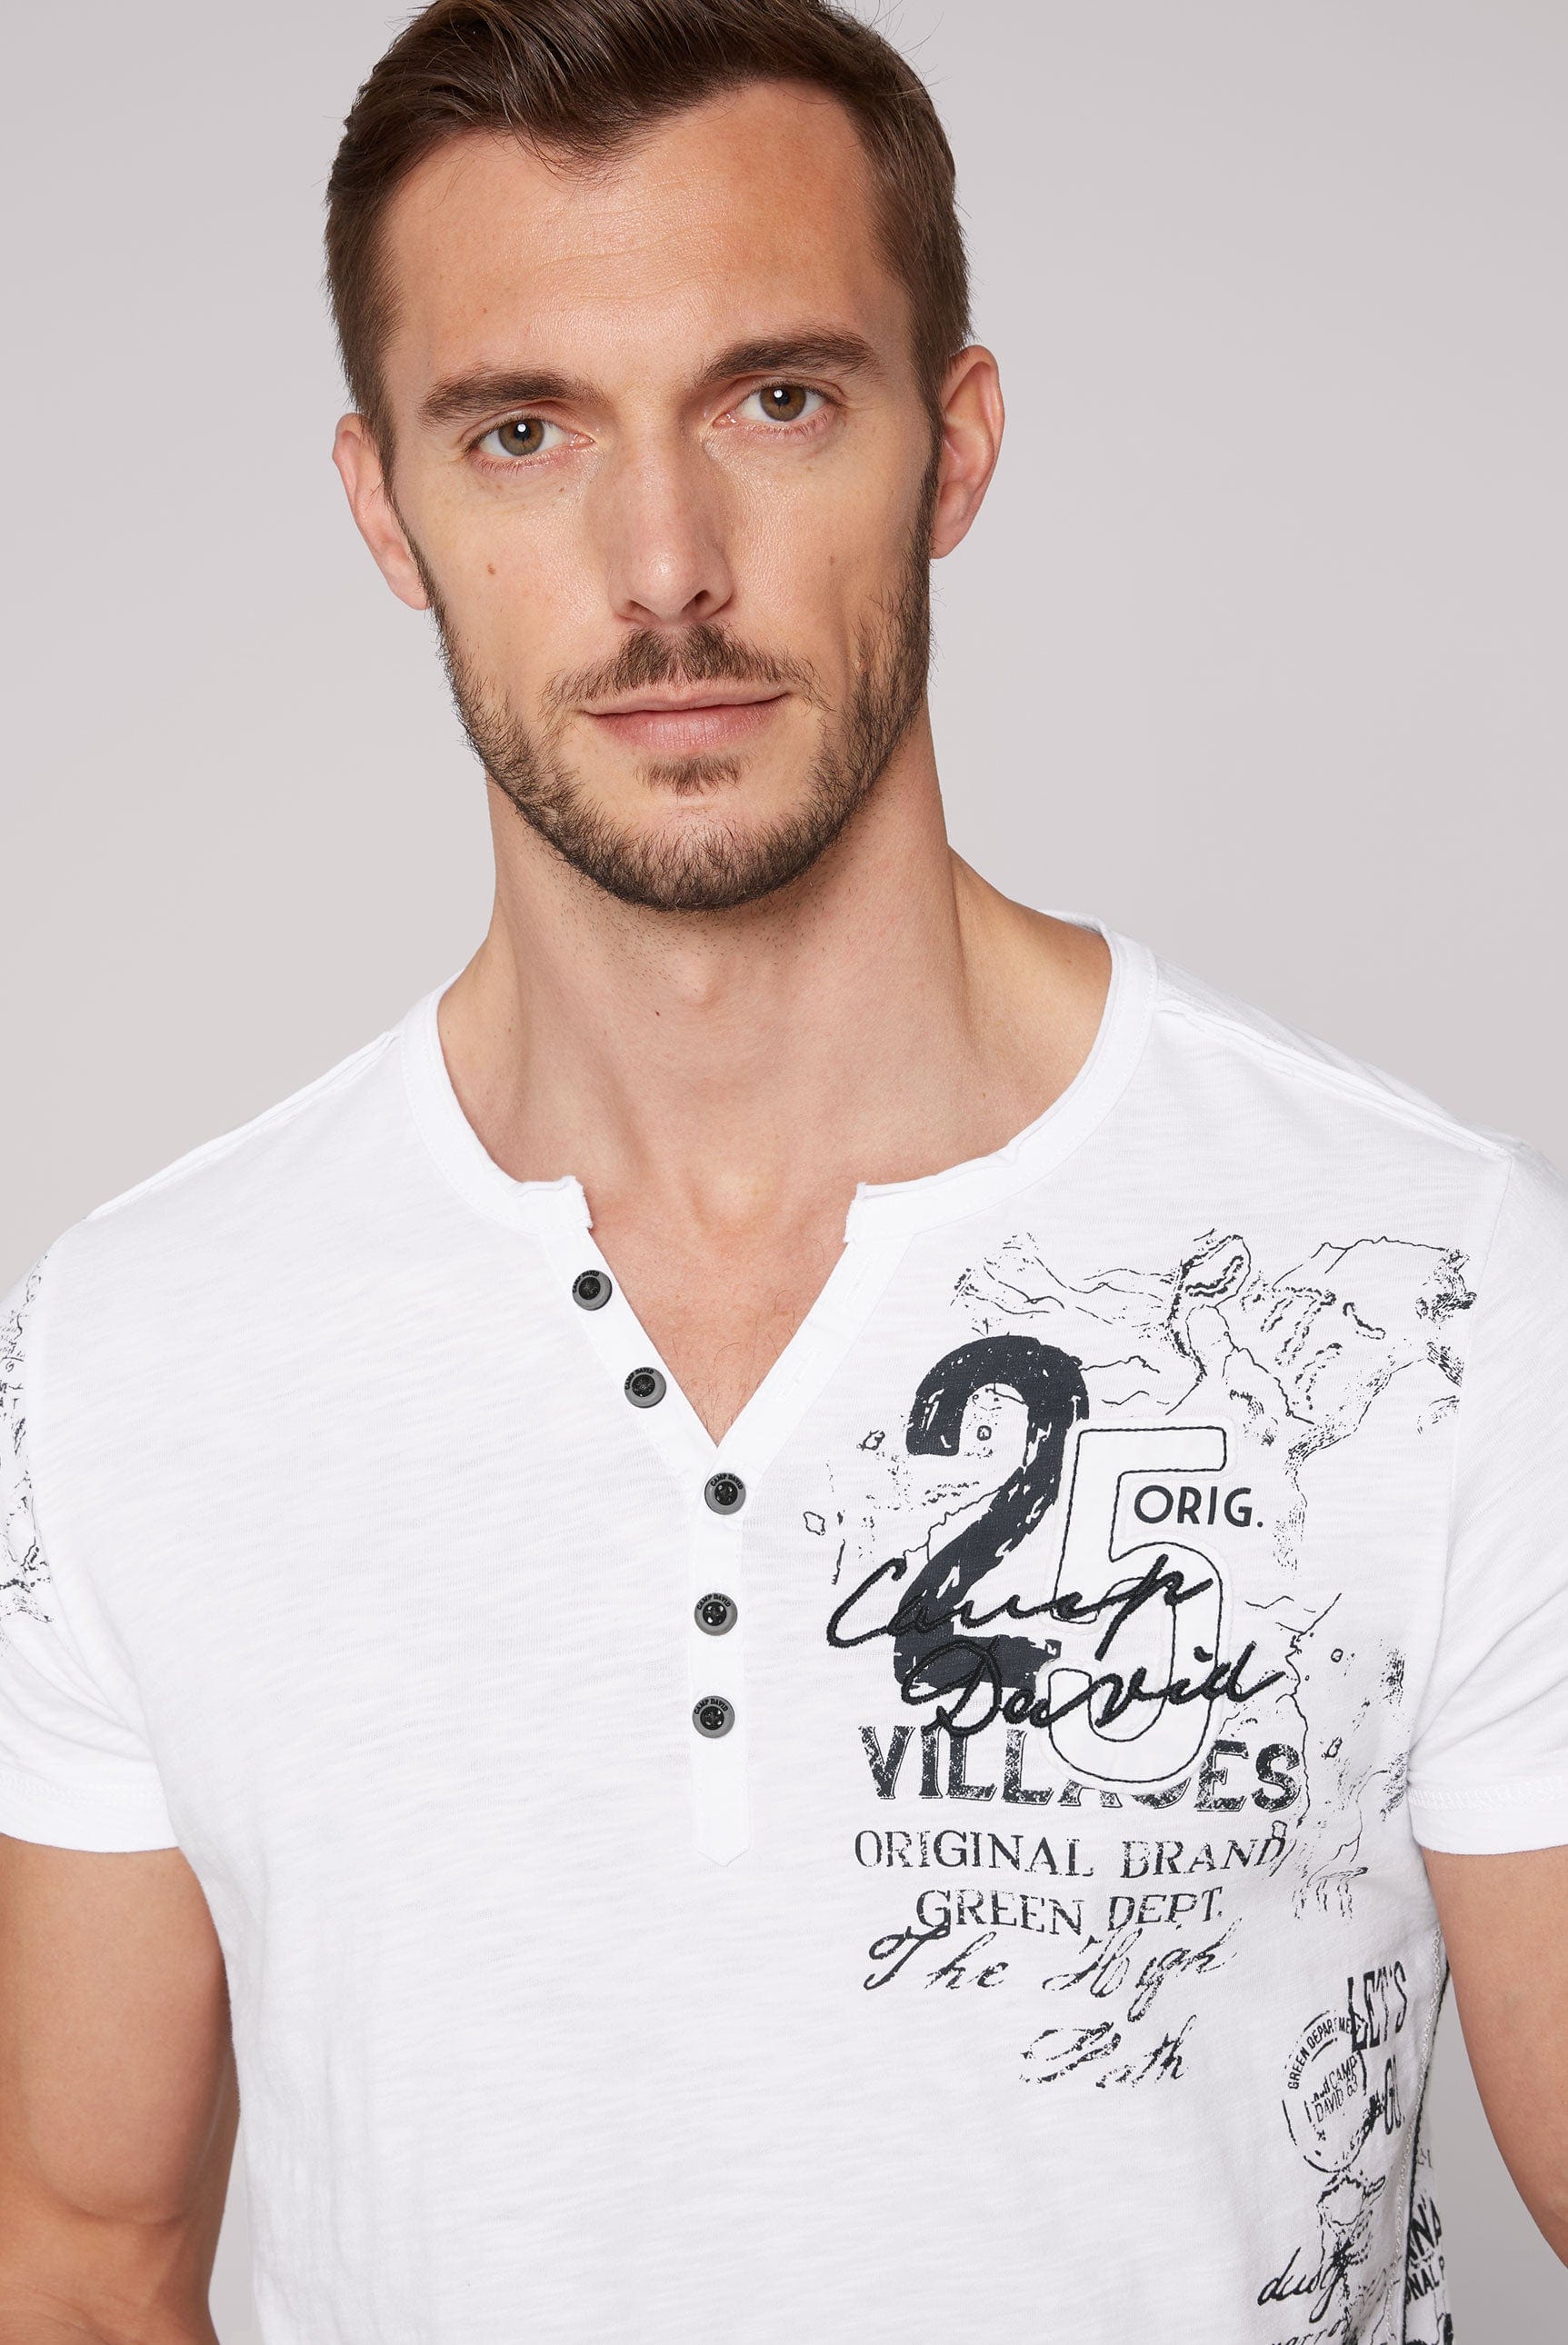 button Fashion v-neck David optic - Terre, Stateshop T-Shirt, Chique Camp white